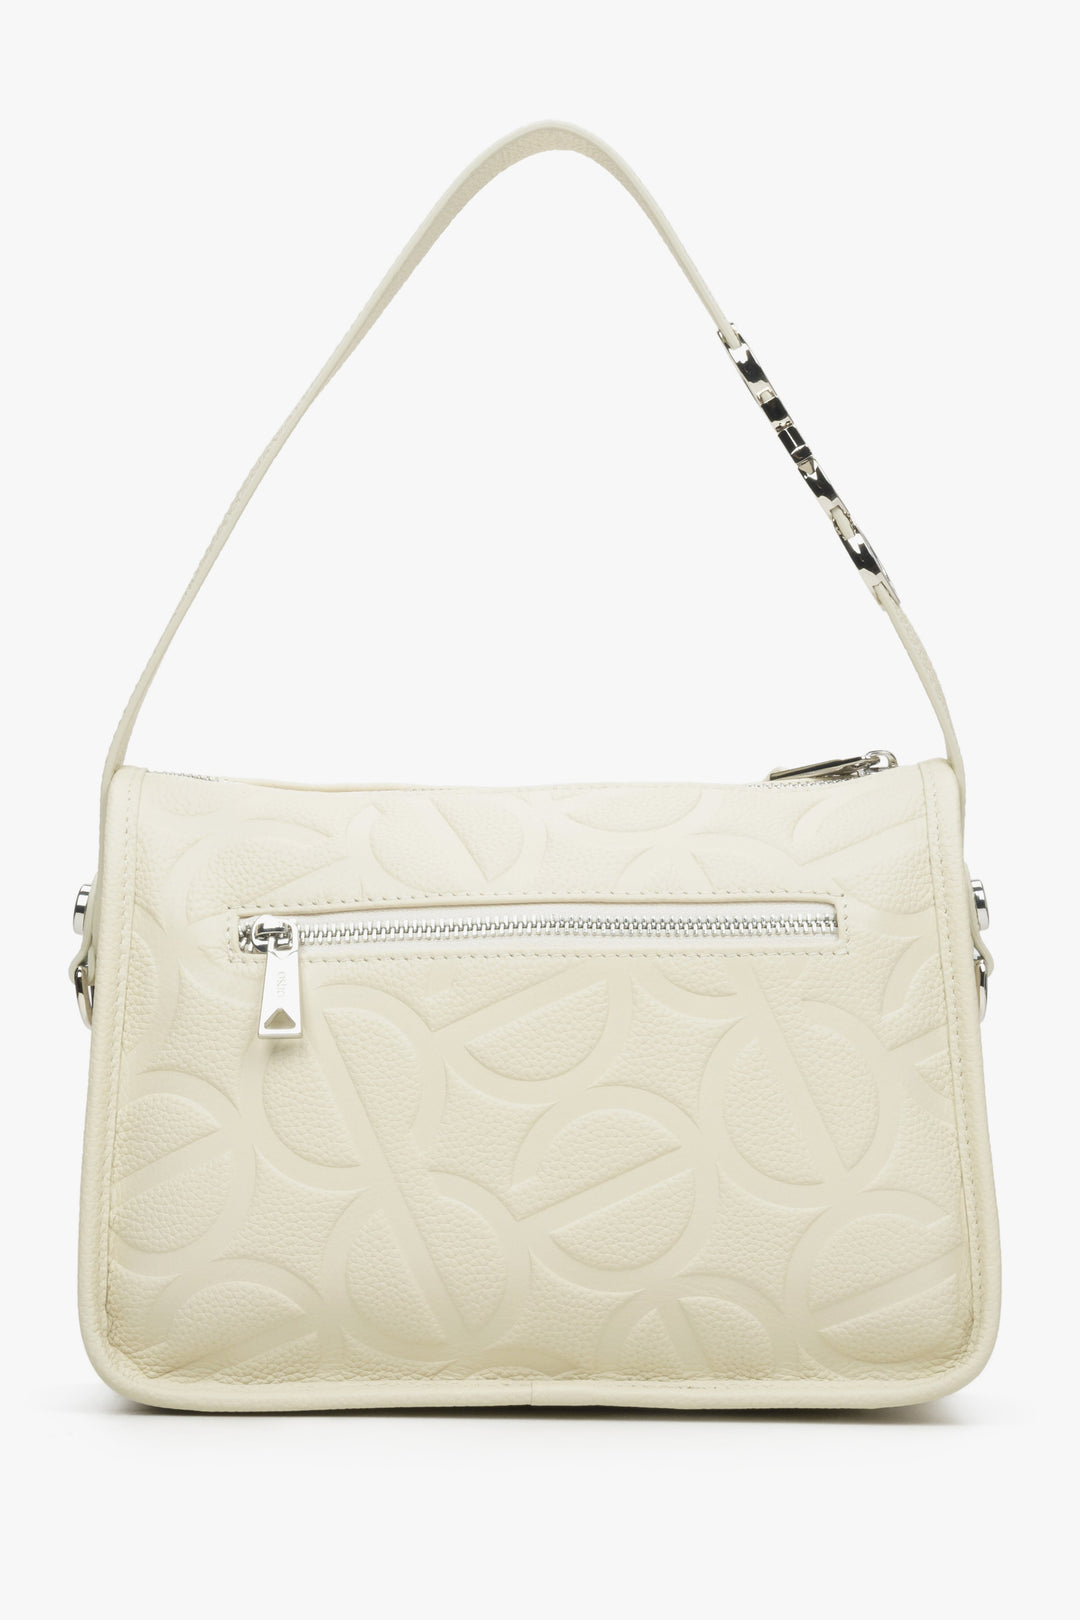 Cream beige women's handbag - reverse.